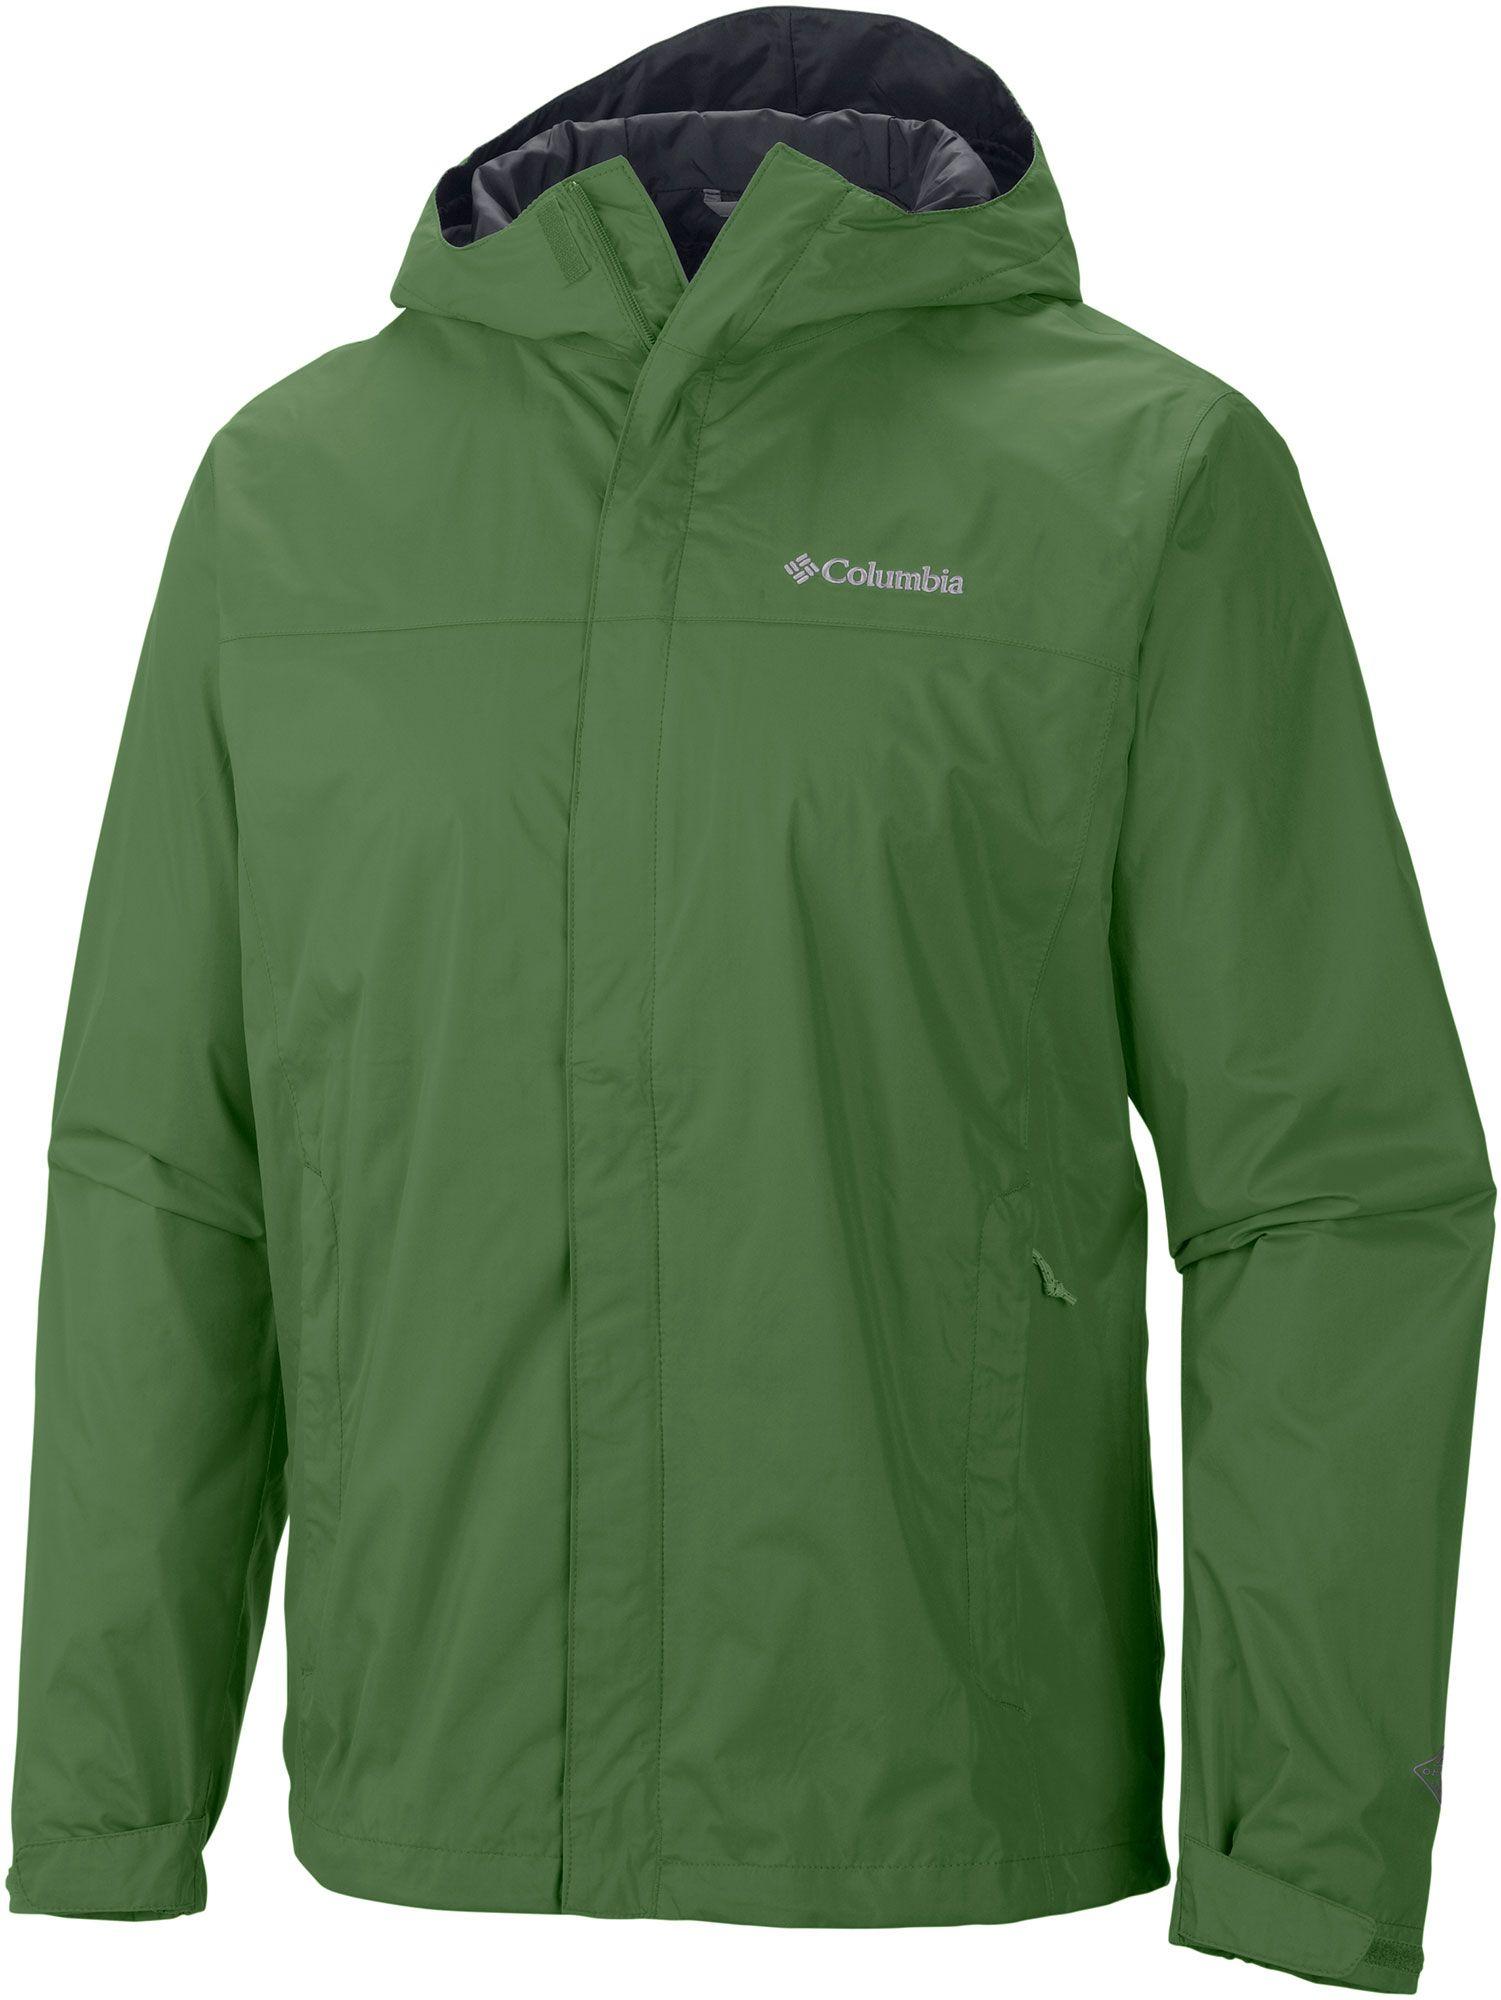 Columbia Synthetic Watertight Ii Rain Jacket in Green for Men - Lyst